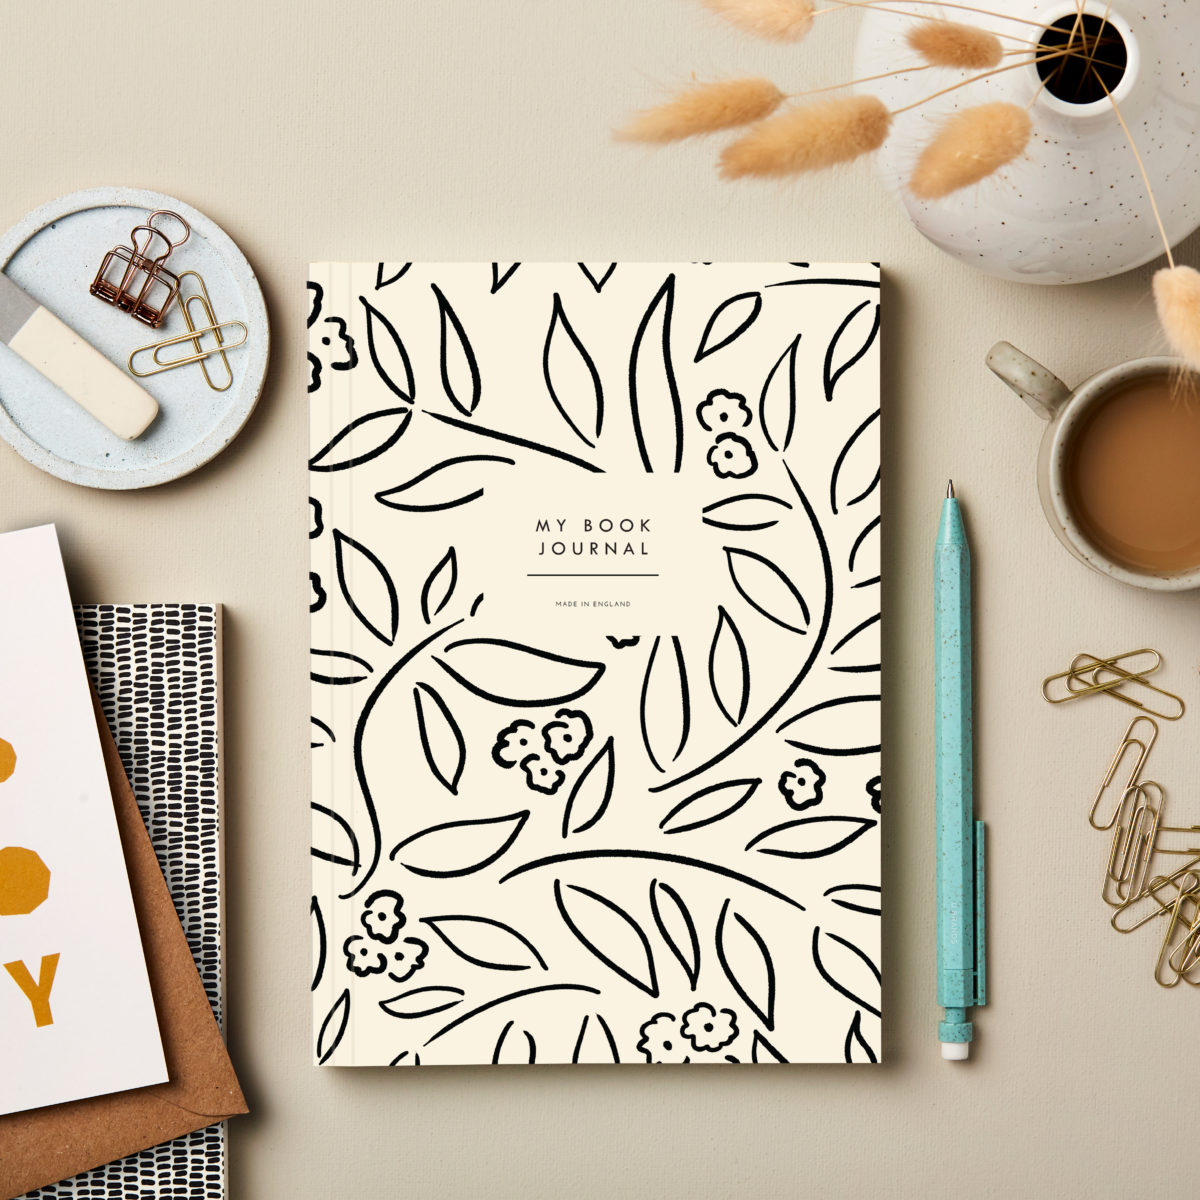 mecharene - Book Cover Art Design Ideas for Friend's Autobiography